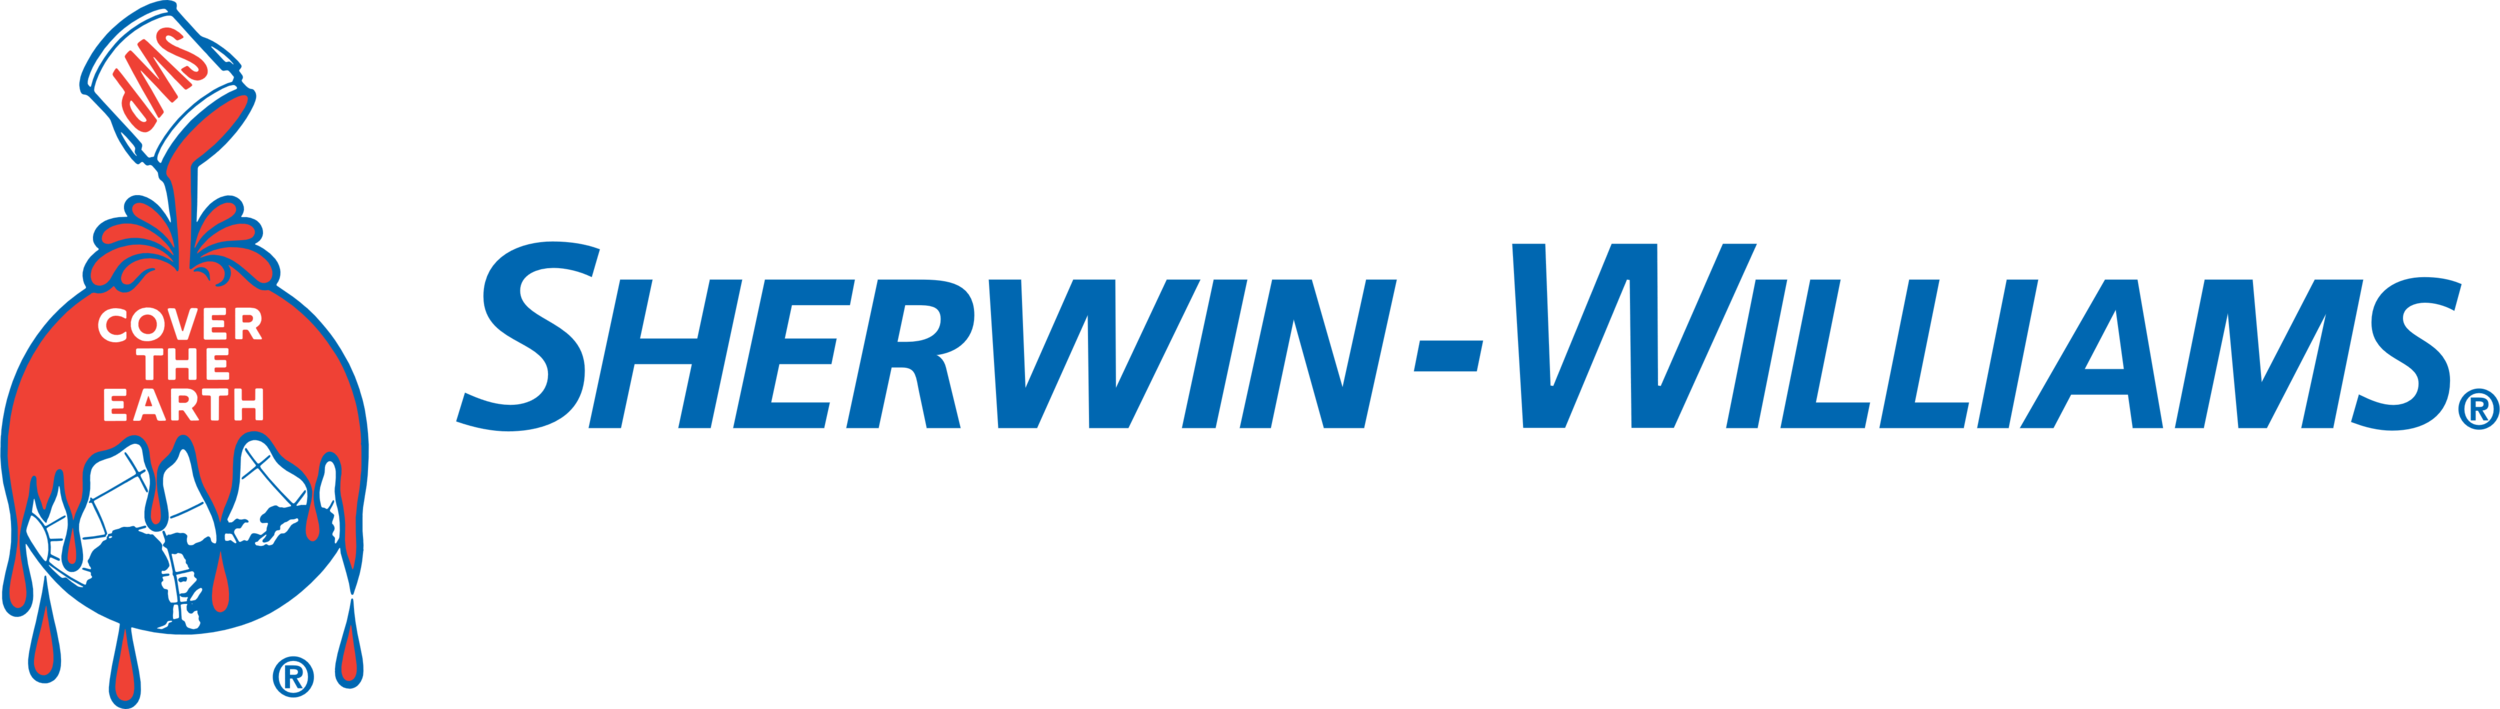 Sherwin-Williams_logo_wordmark.png